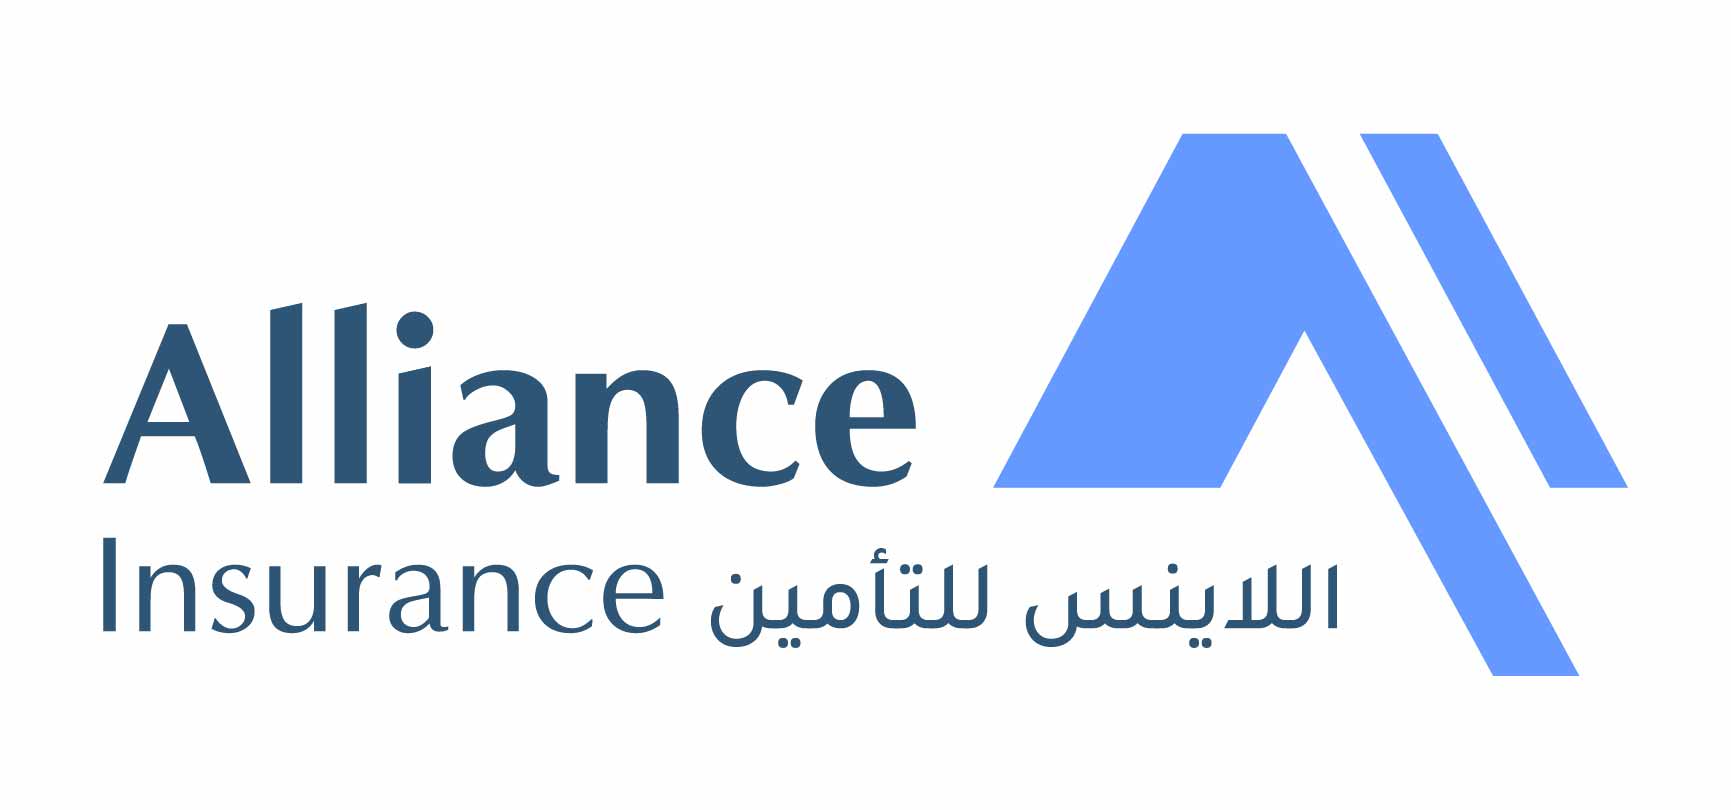 Alliance Insurance logo